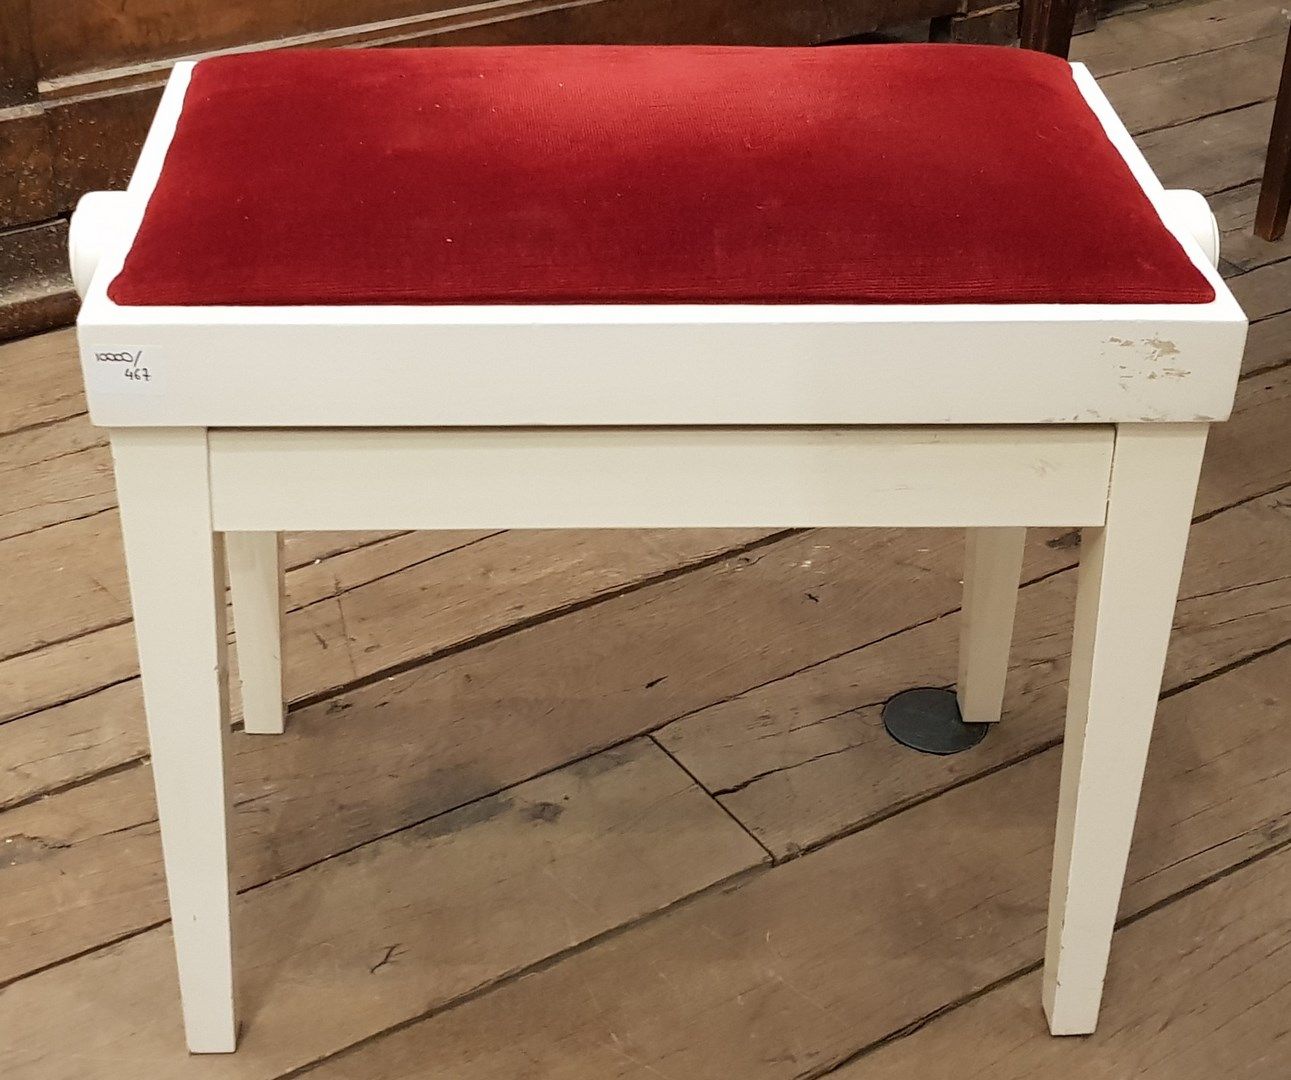 Null 现代钢琴凳，带有可调节的红色天鹅绒座椅。

H.46 cm - W. 53 cm - D. 33 cm